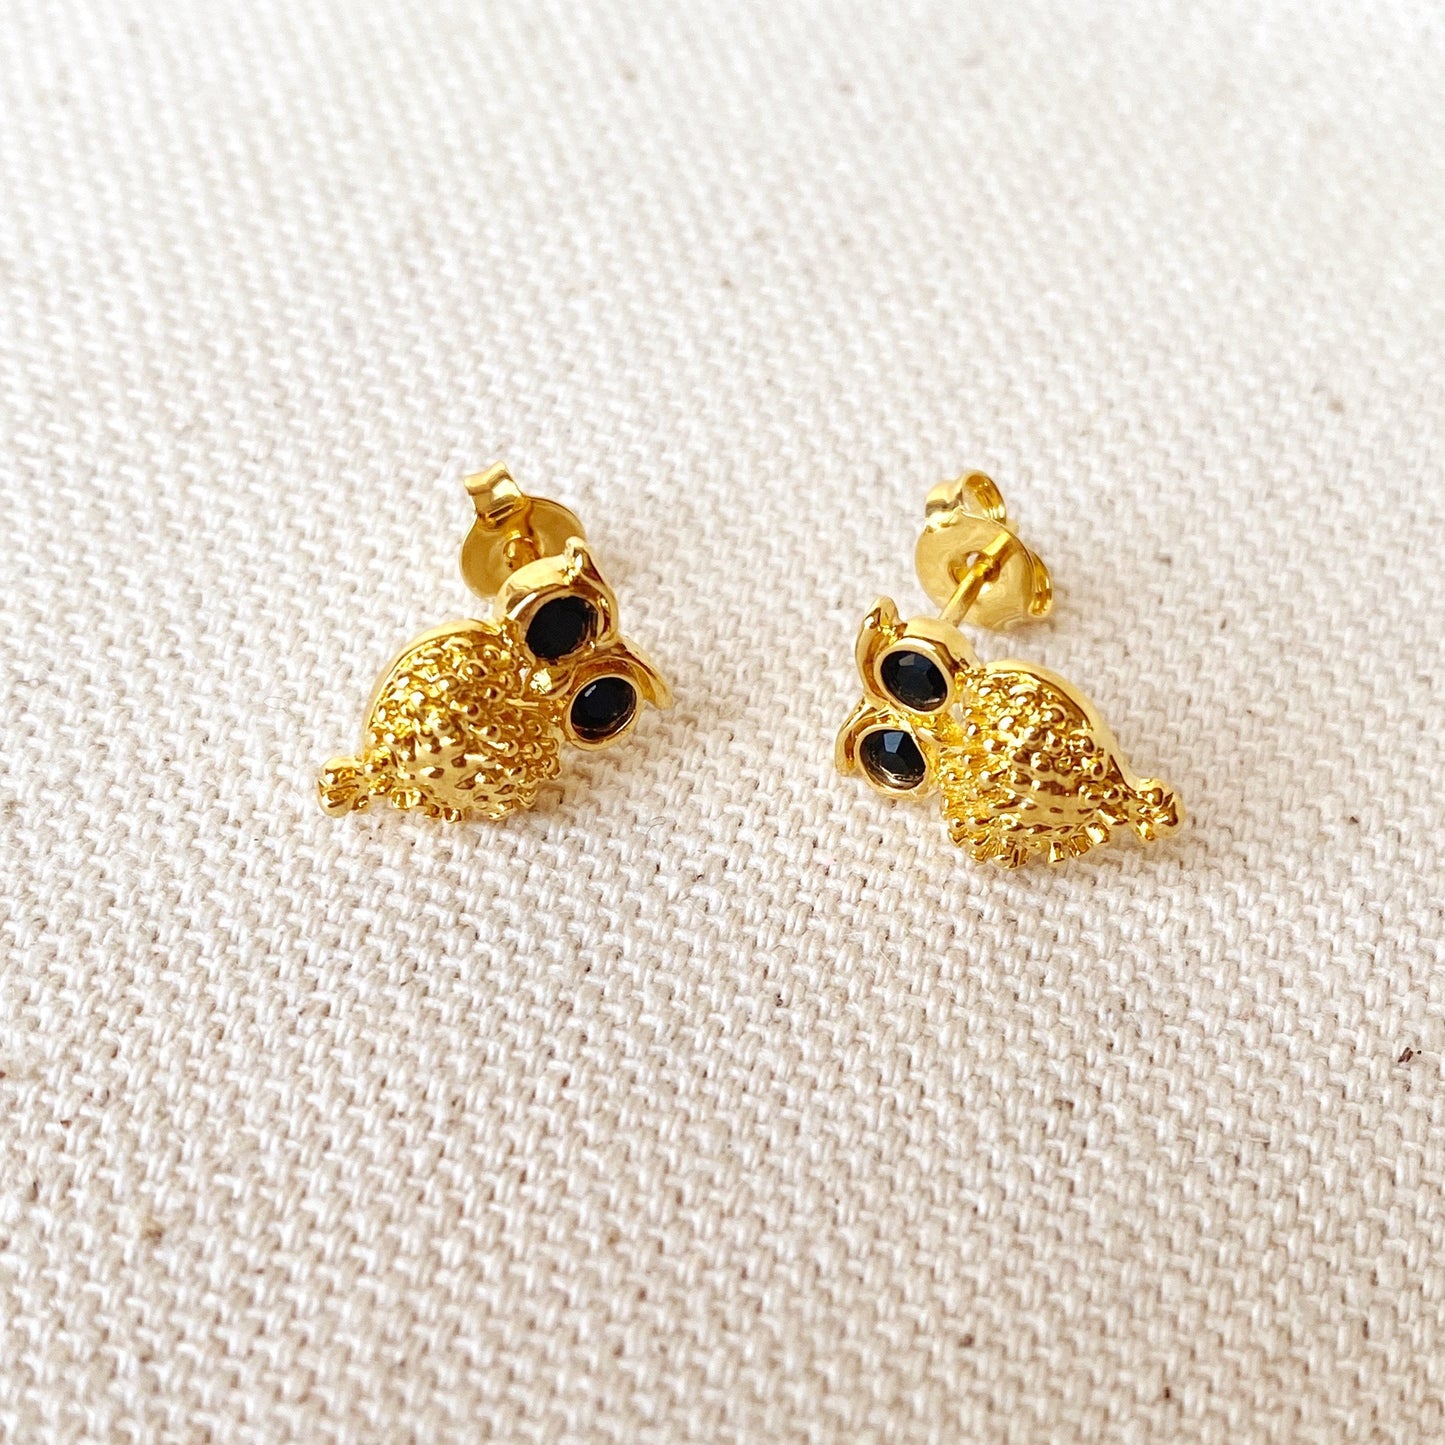 GoldFi 18k Gold Filled Owl Black Crystal Eyes Stud Earrings